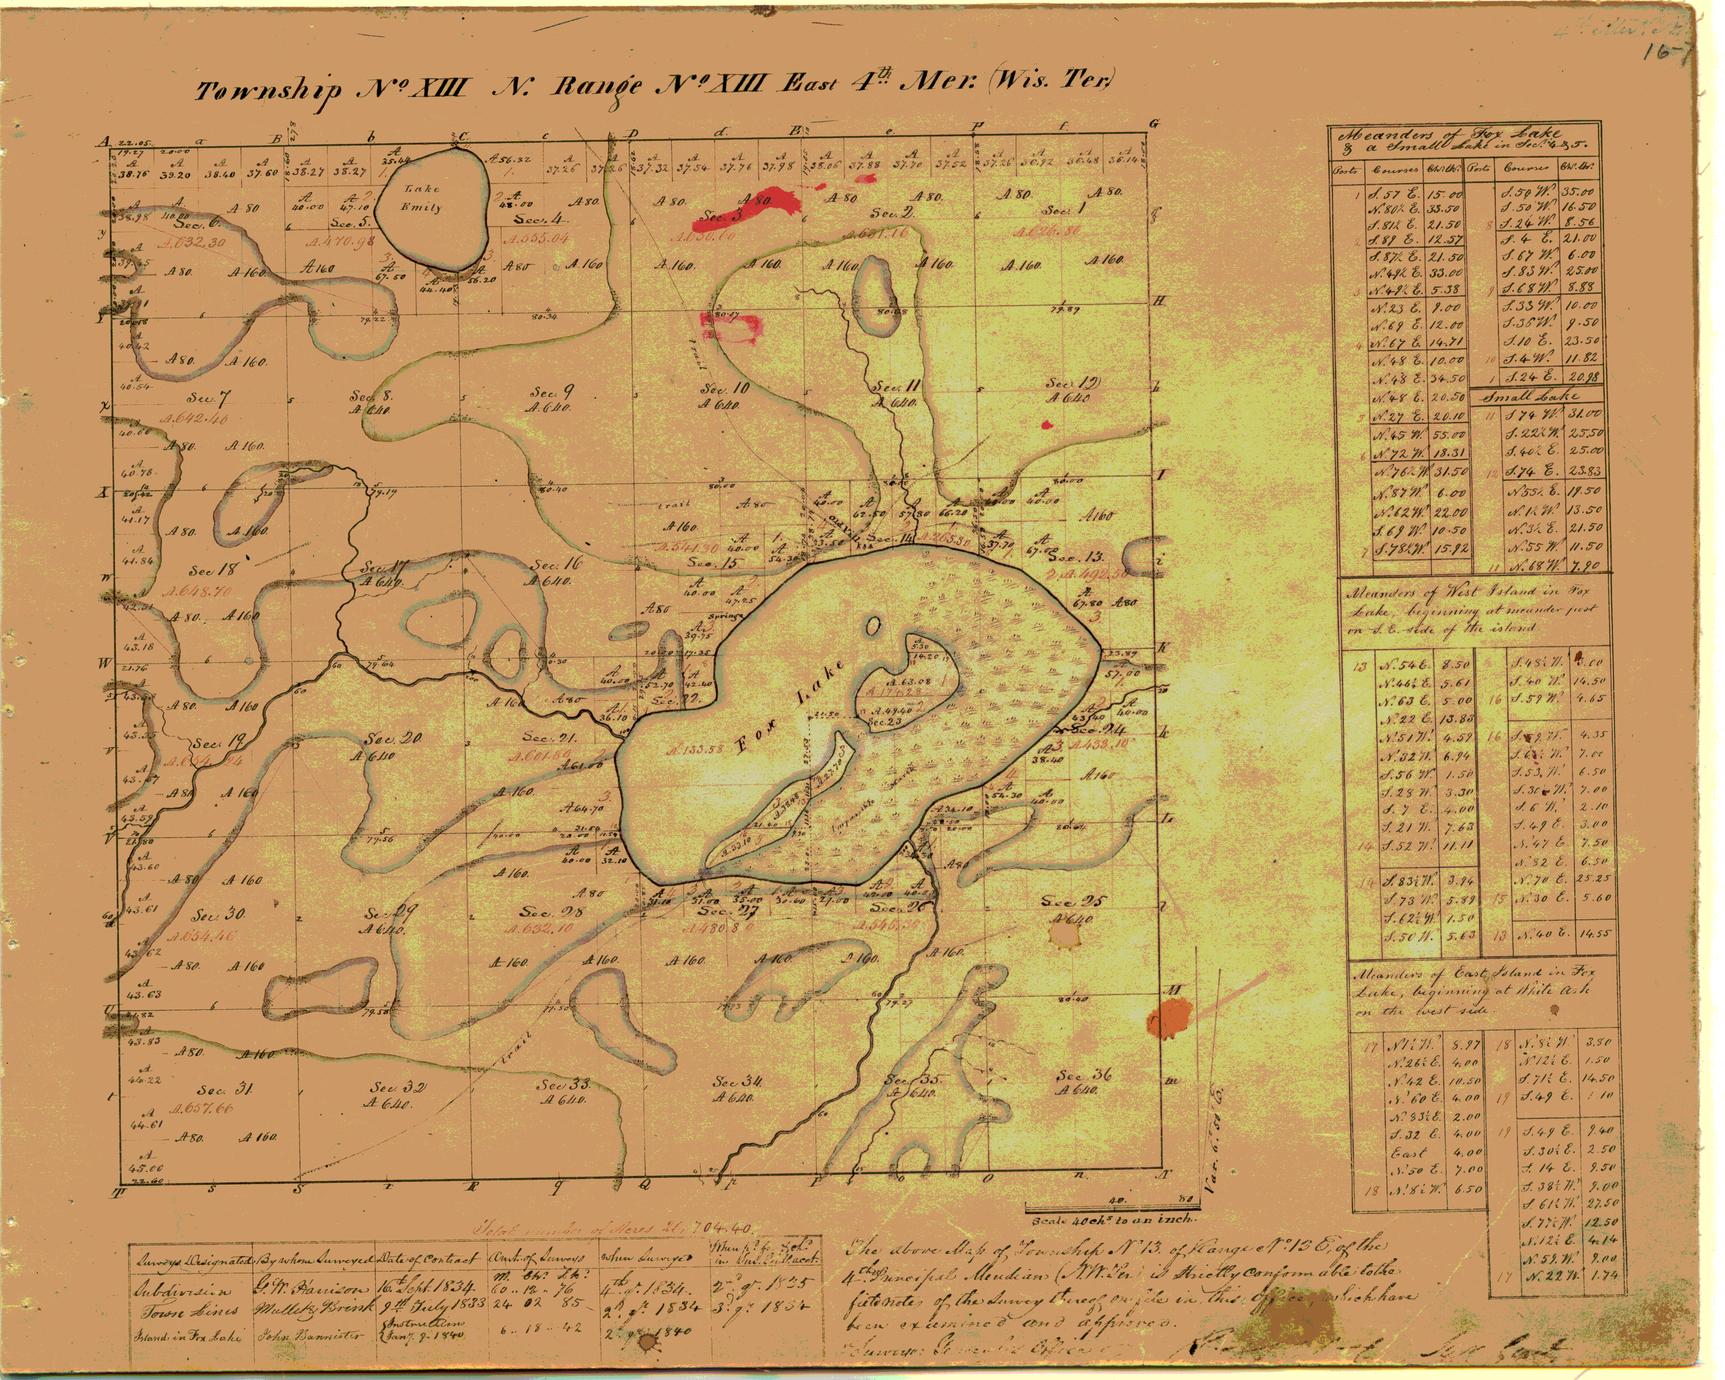 [Public Land Survey System map: Wisconsin Township 13 North, Range 13 East]